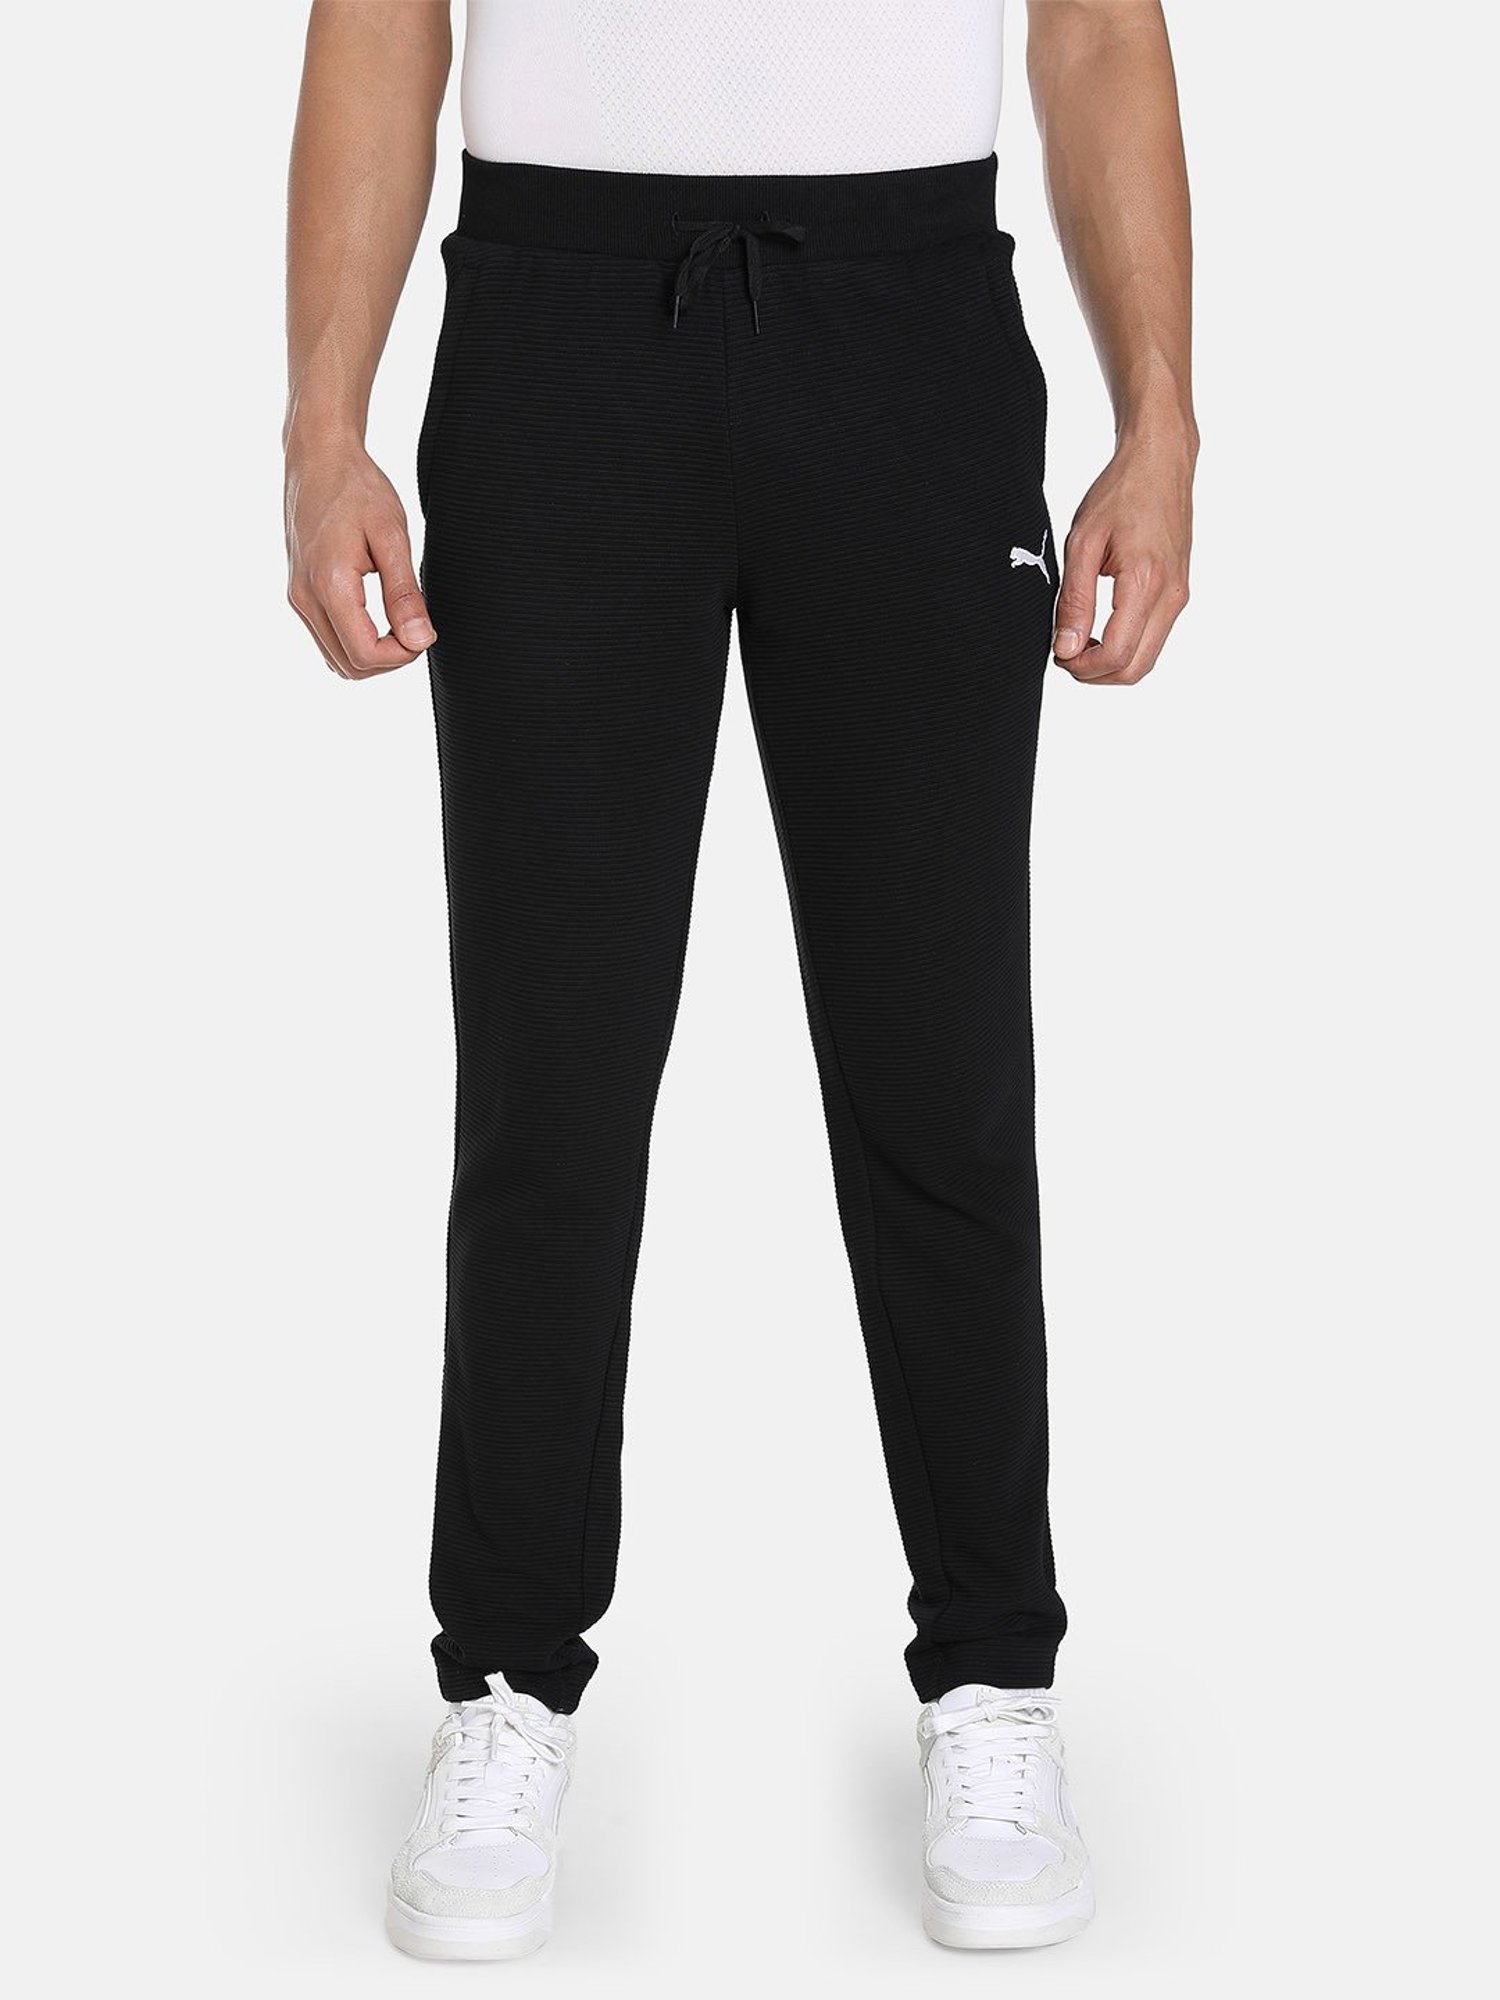 Denim Lounge - PUMA International Track Pants for Women - Gray Violet  (531659-09)